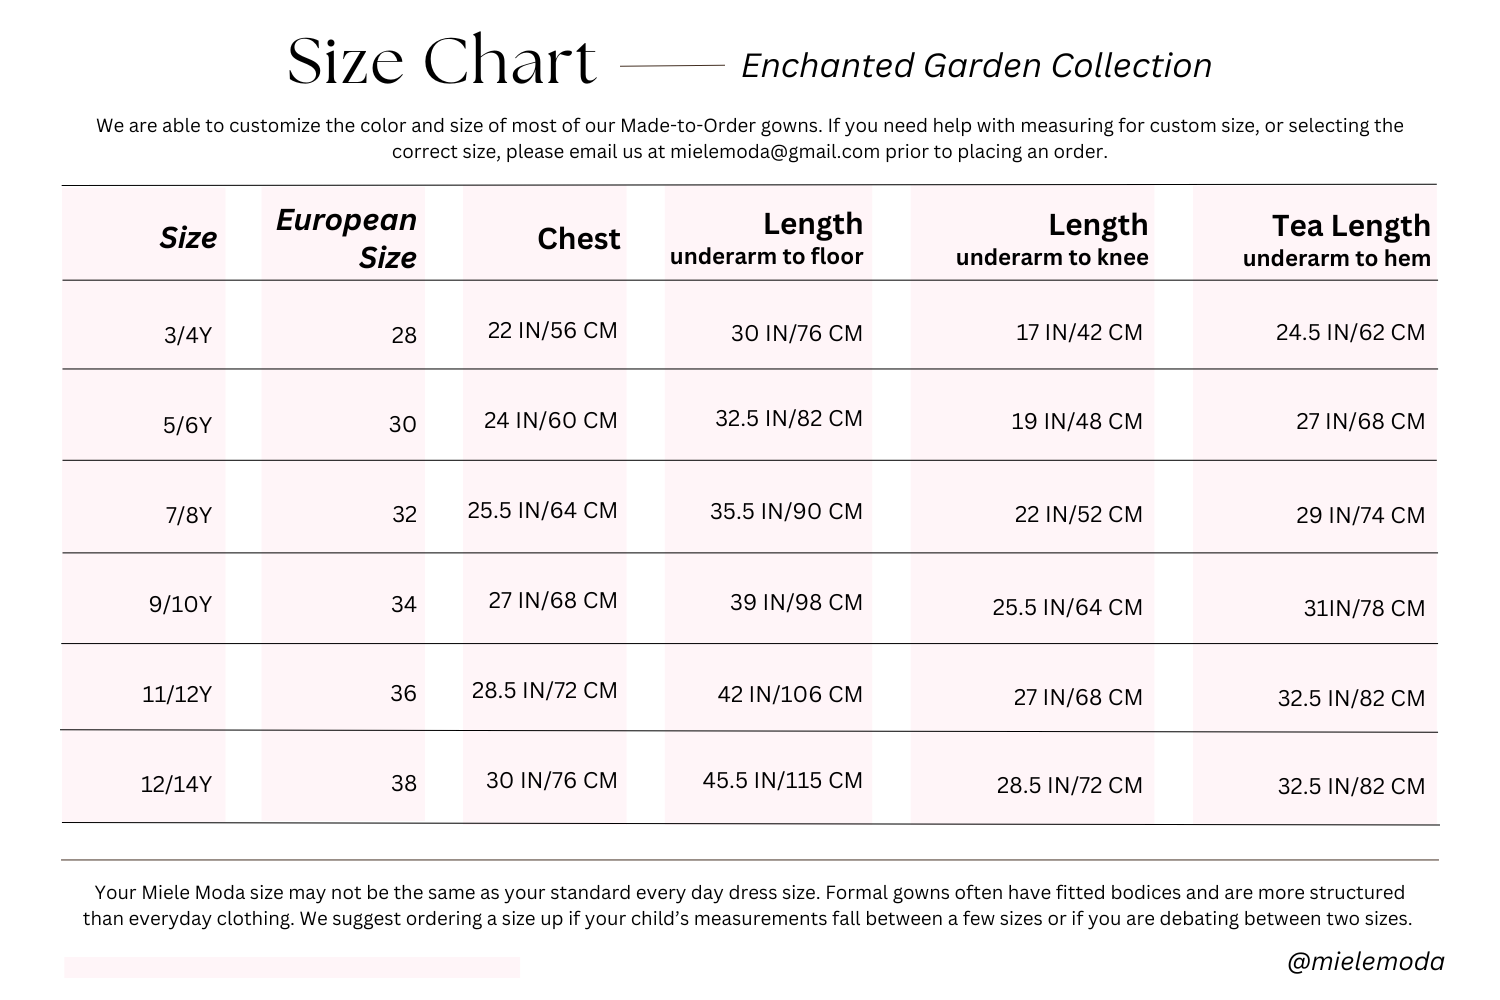 Enchanted Garden Collection Size Chart - Miele Moda Luxury Fashion